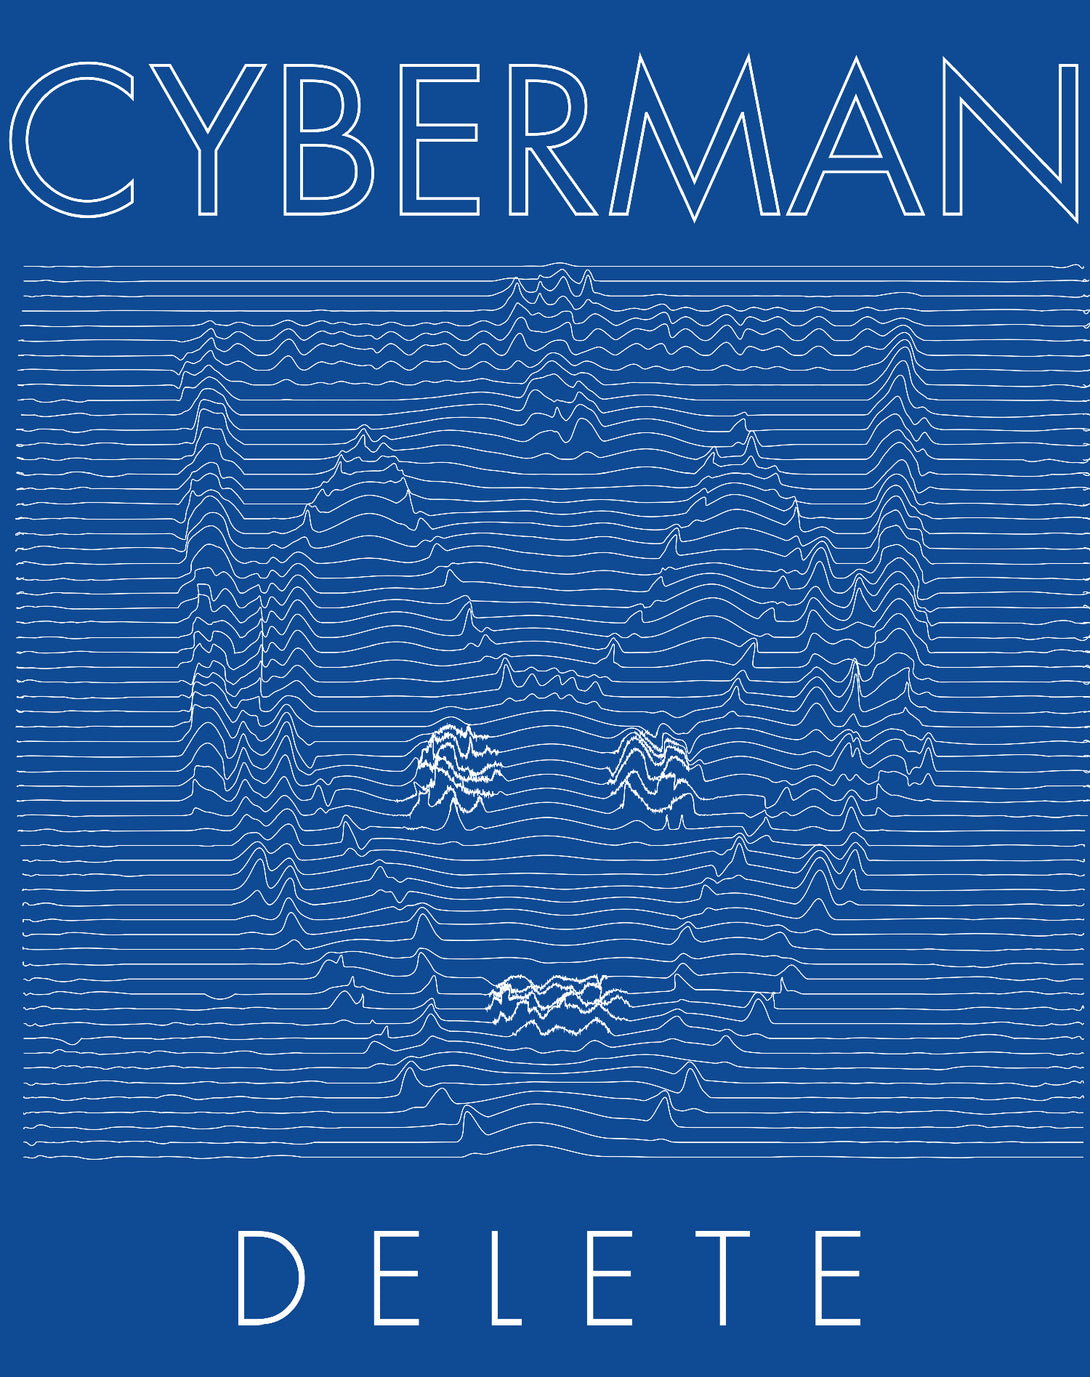 Doctor Who Spacetime-Tour Cybermen Official Women's T-shirt Blue - Urban Species Design Close Up